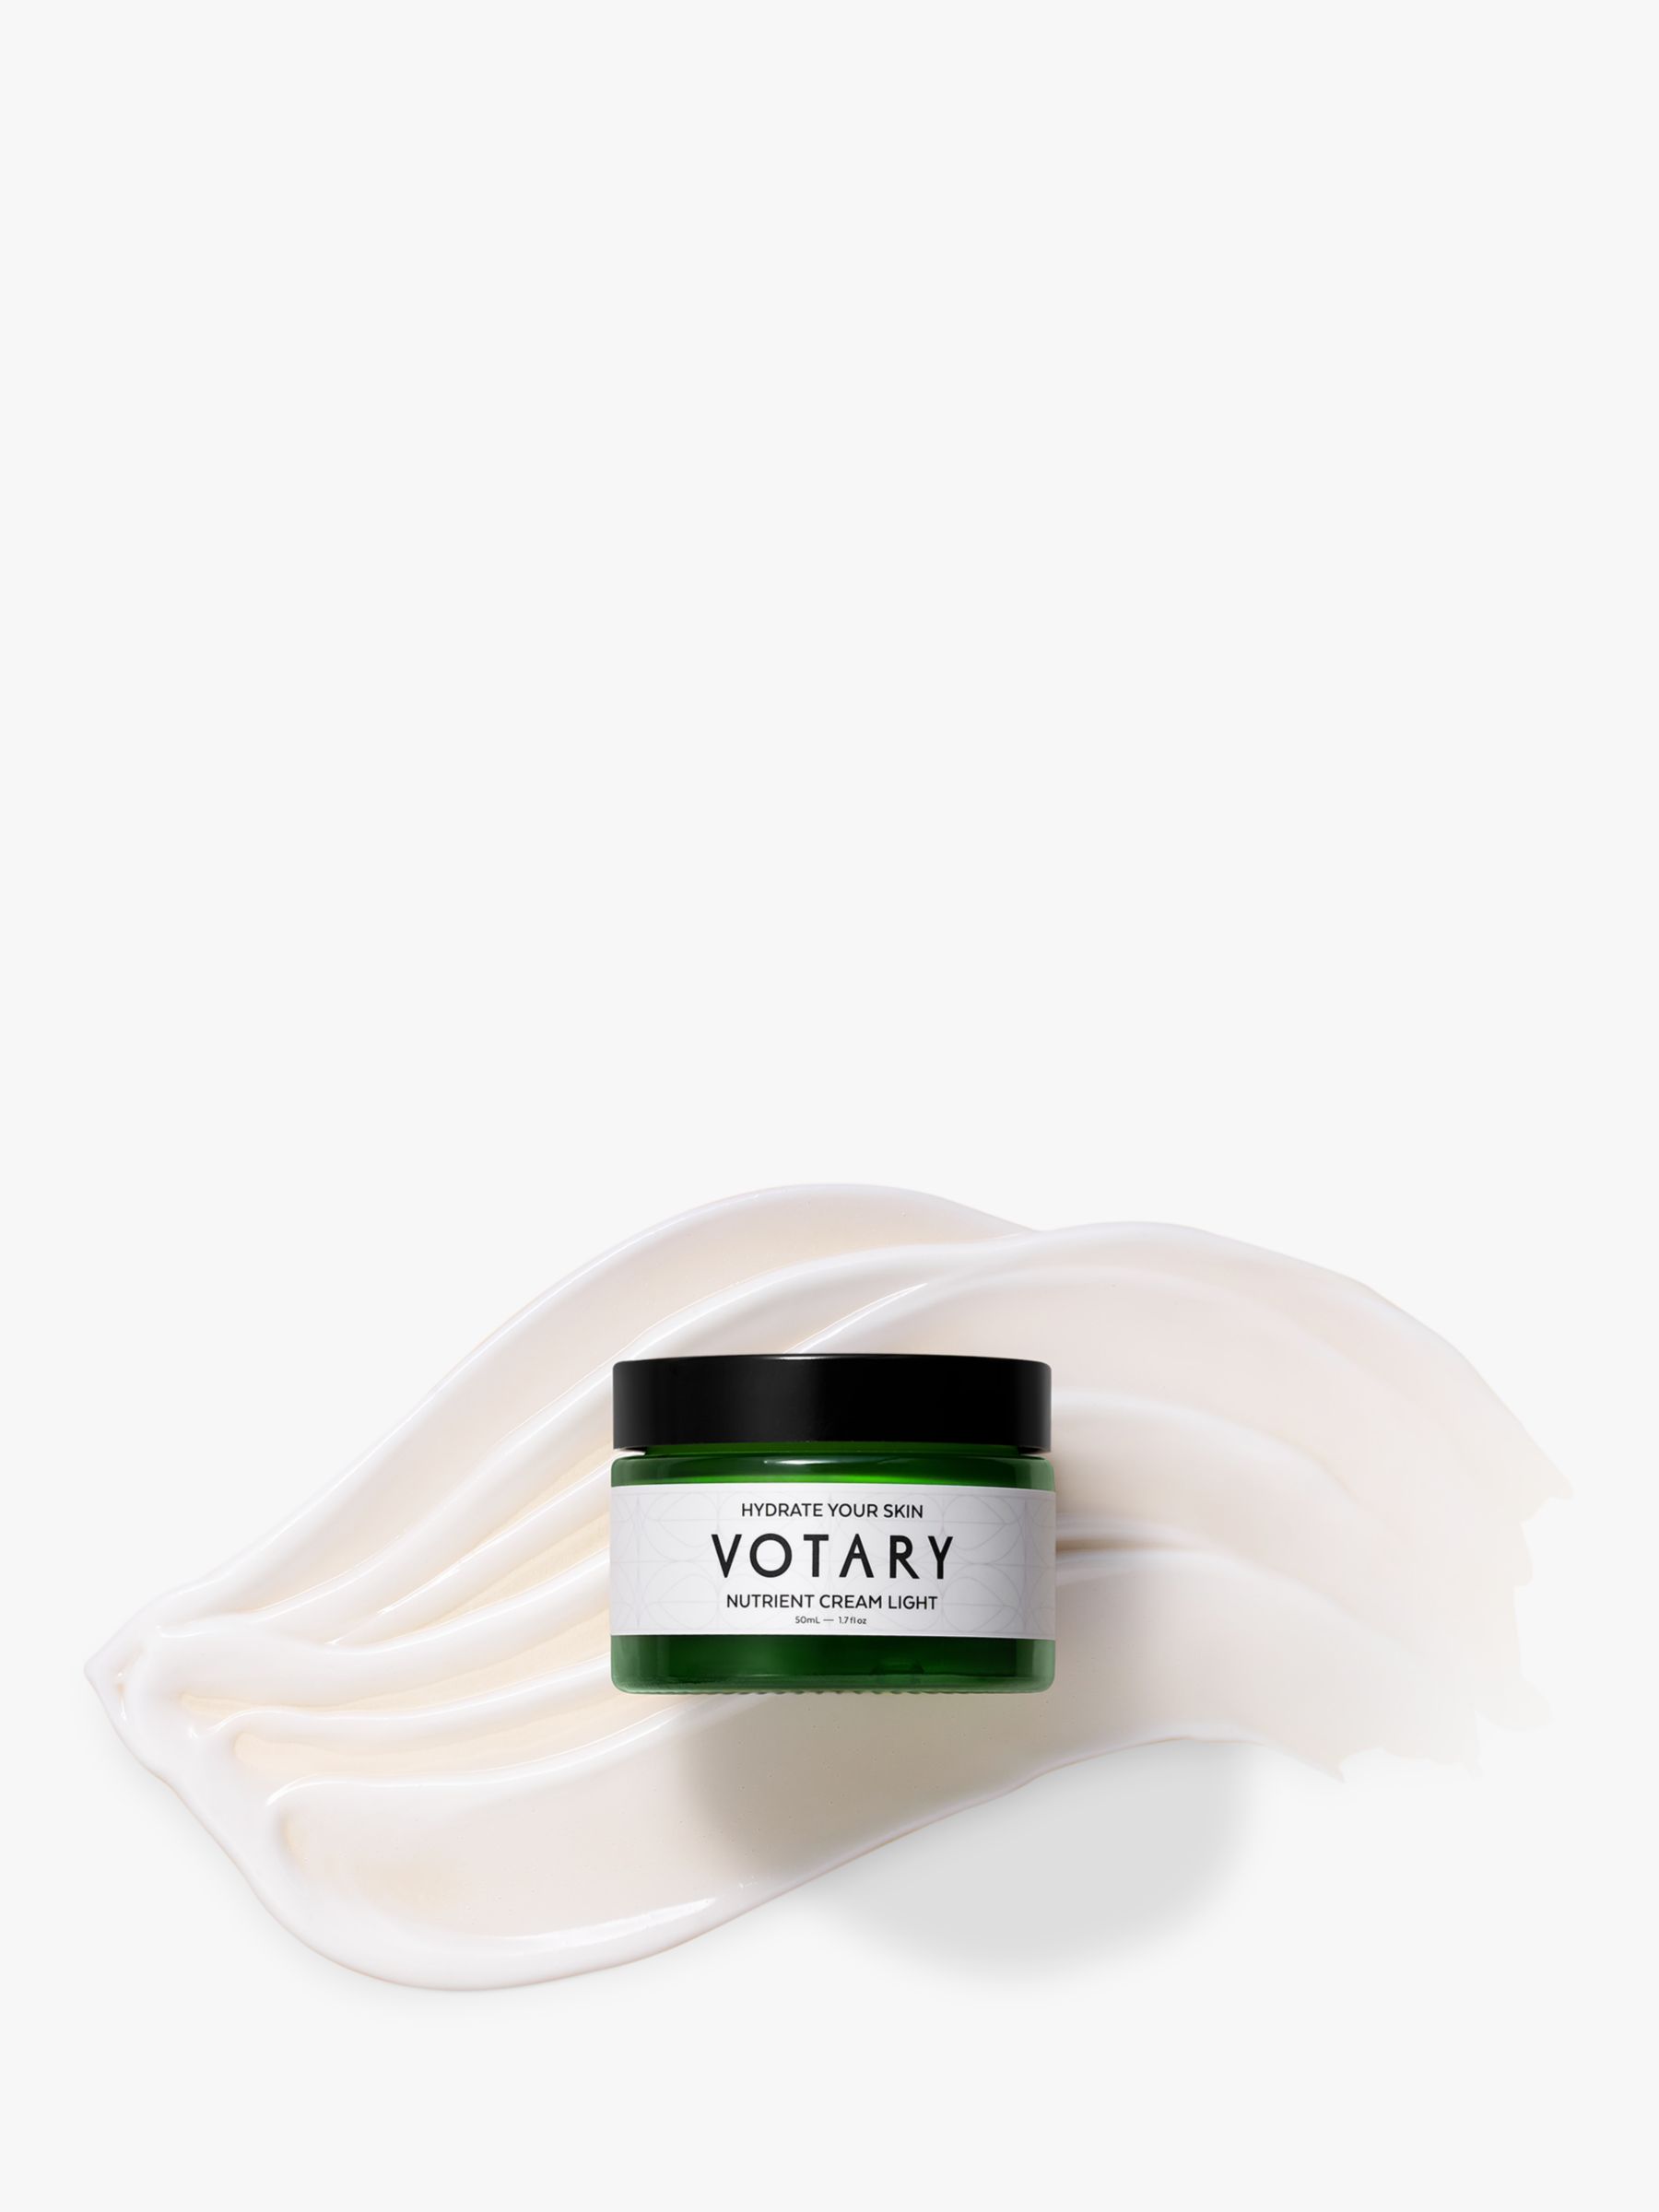 Votary Nutrient Cream Light, 50ml 3